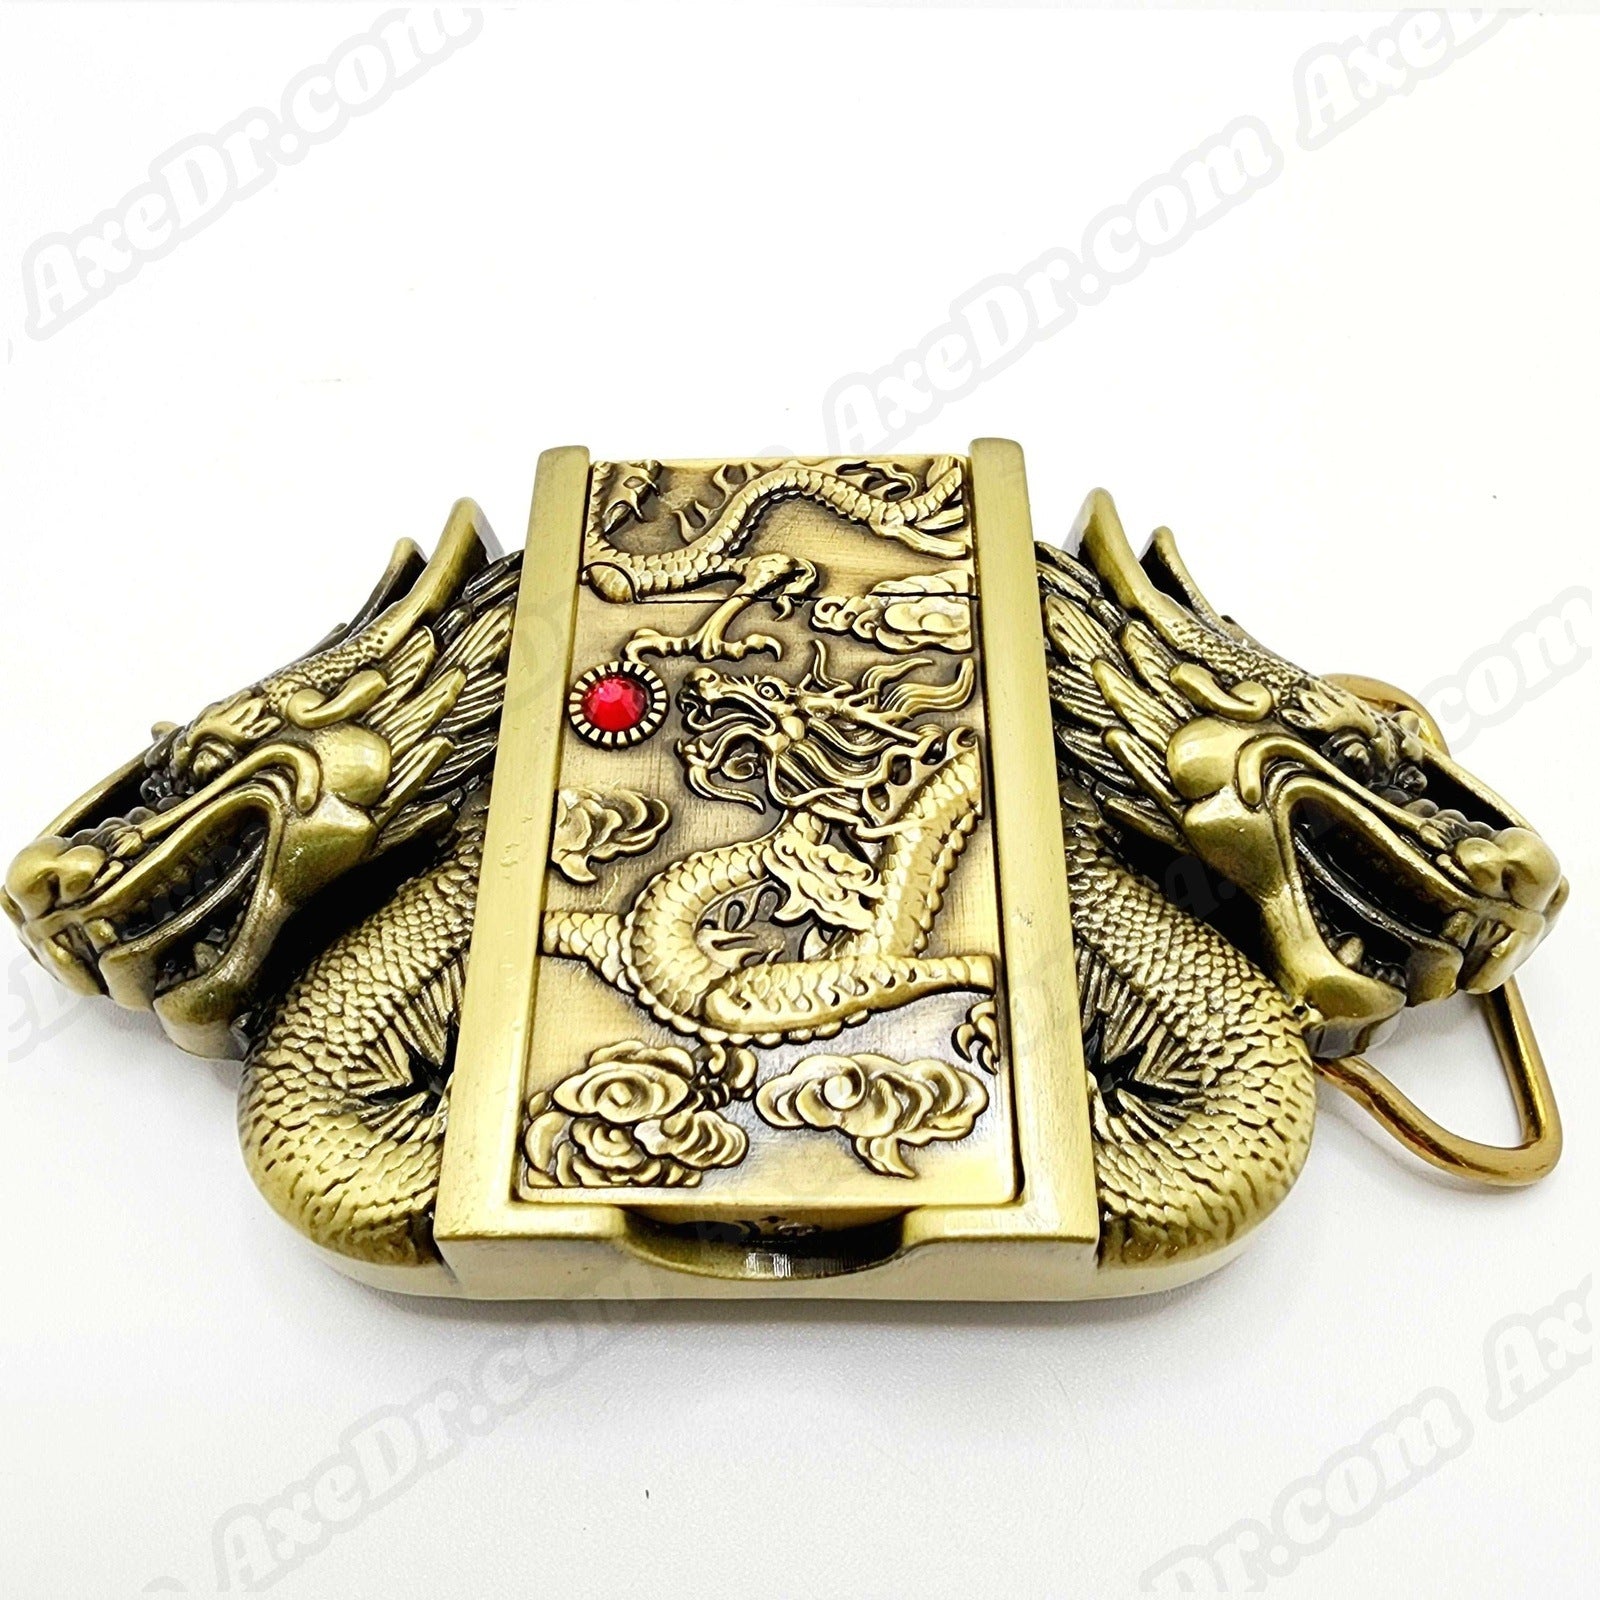 Dual Dragons Gold Lighter Belt Buckle / Push Button Lighter Holder Buckle shop.AxeDr.com Beltbuckle, Buckle, Lighter, Lighter Belt Buckles, lighter buckle, Lighters